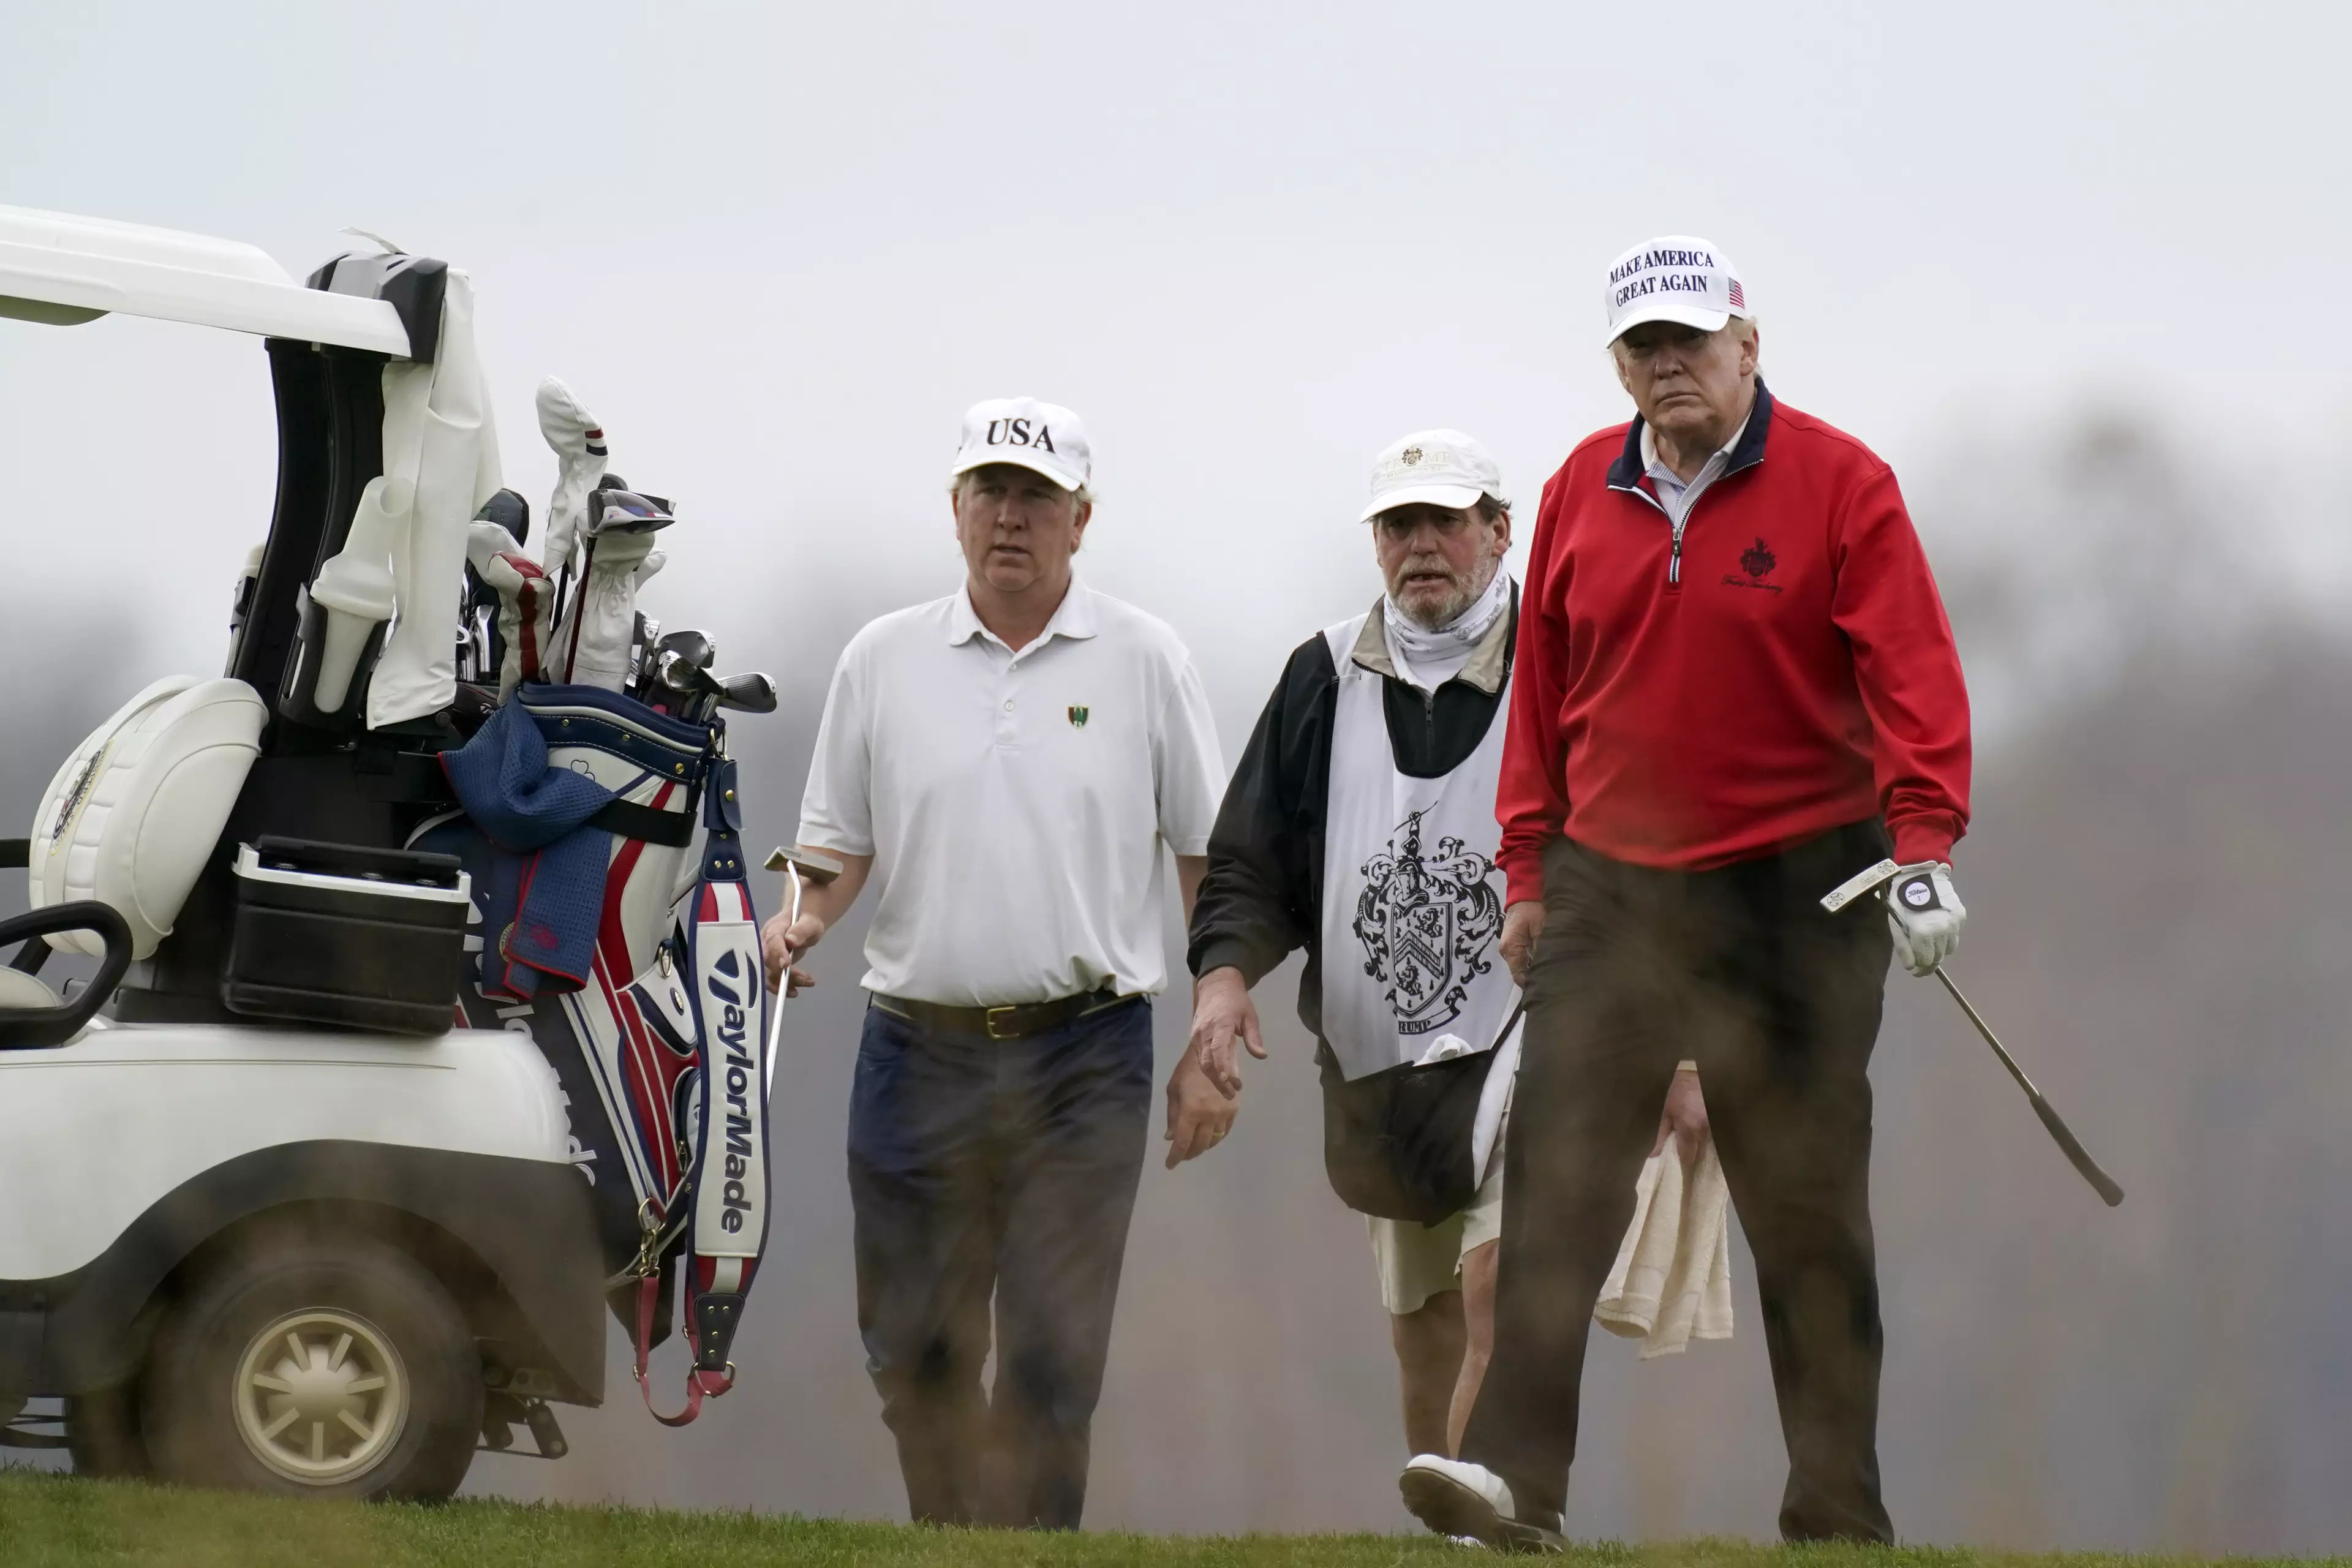 Trump skipped the Pandemic Preparedness meeting to play golf.